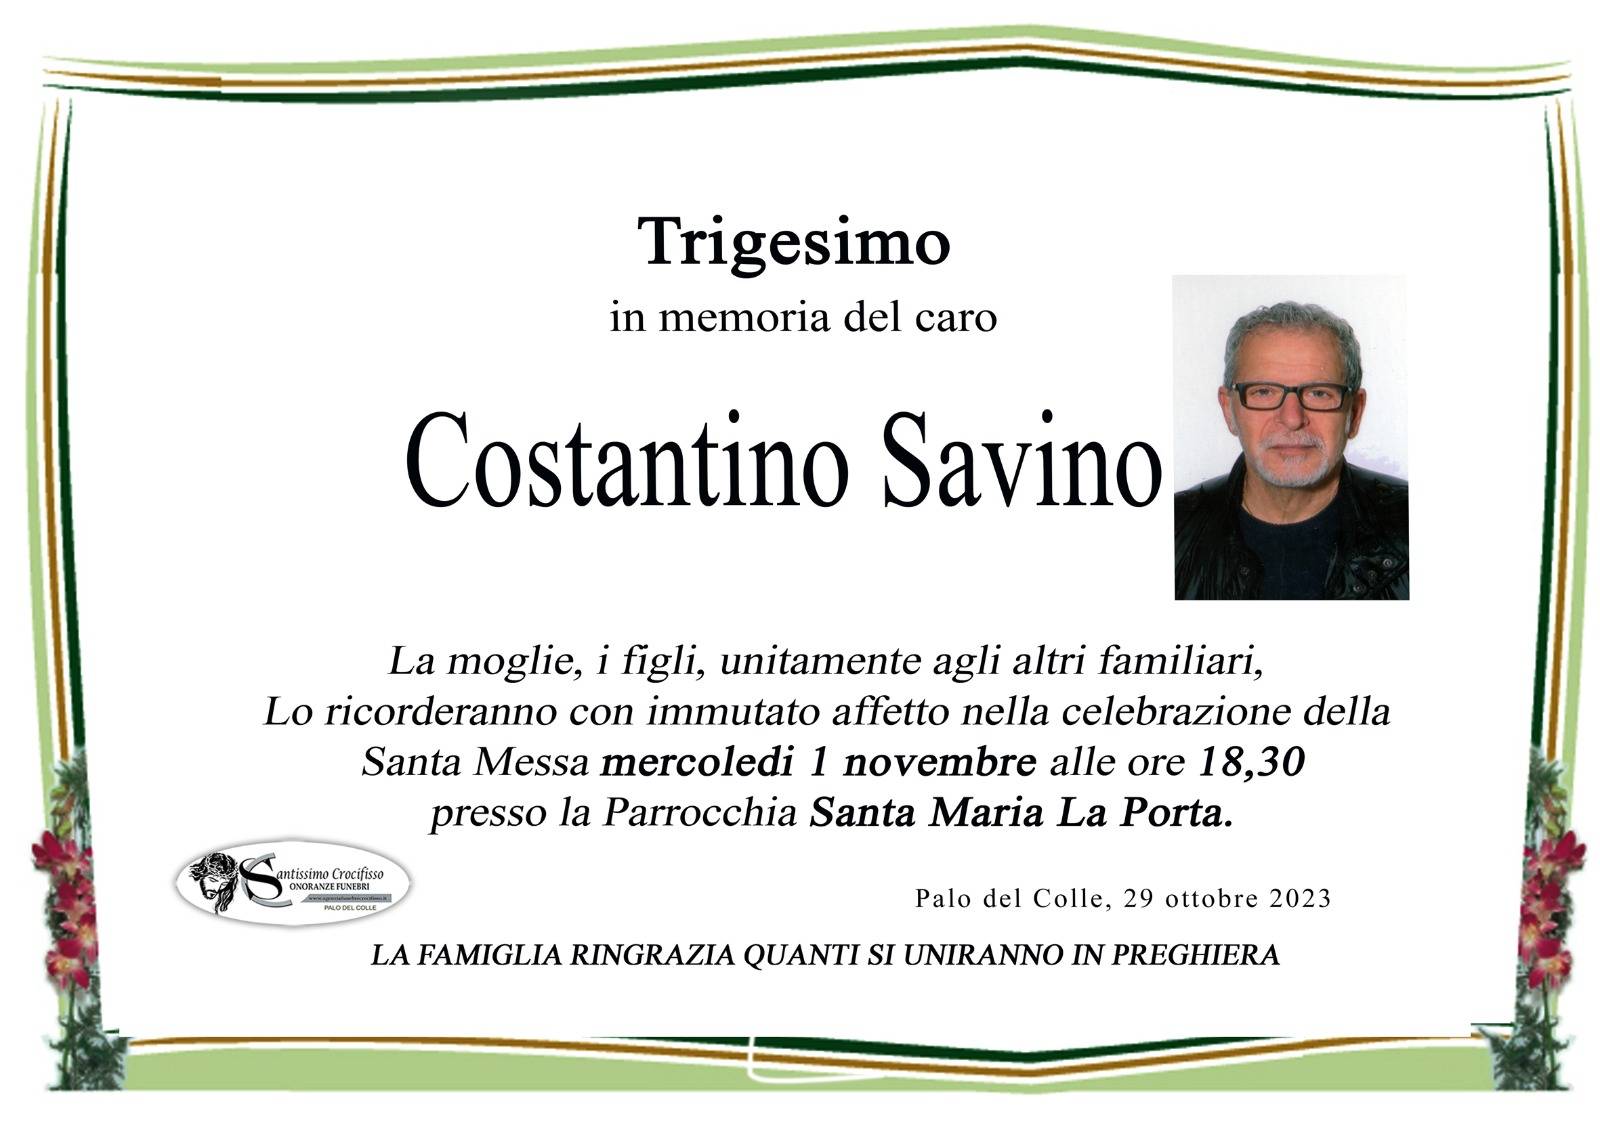 Costantino Savino